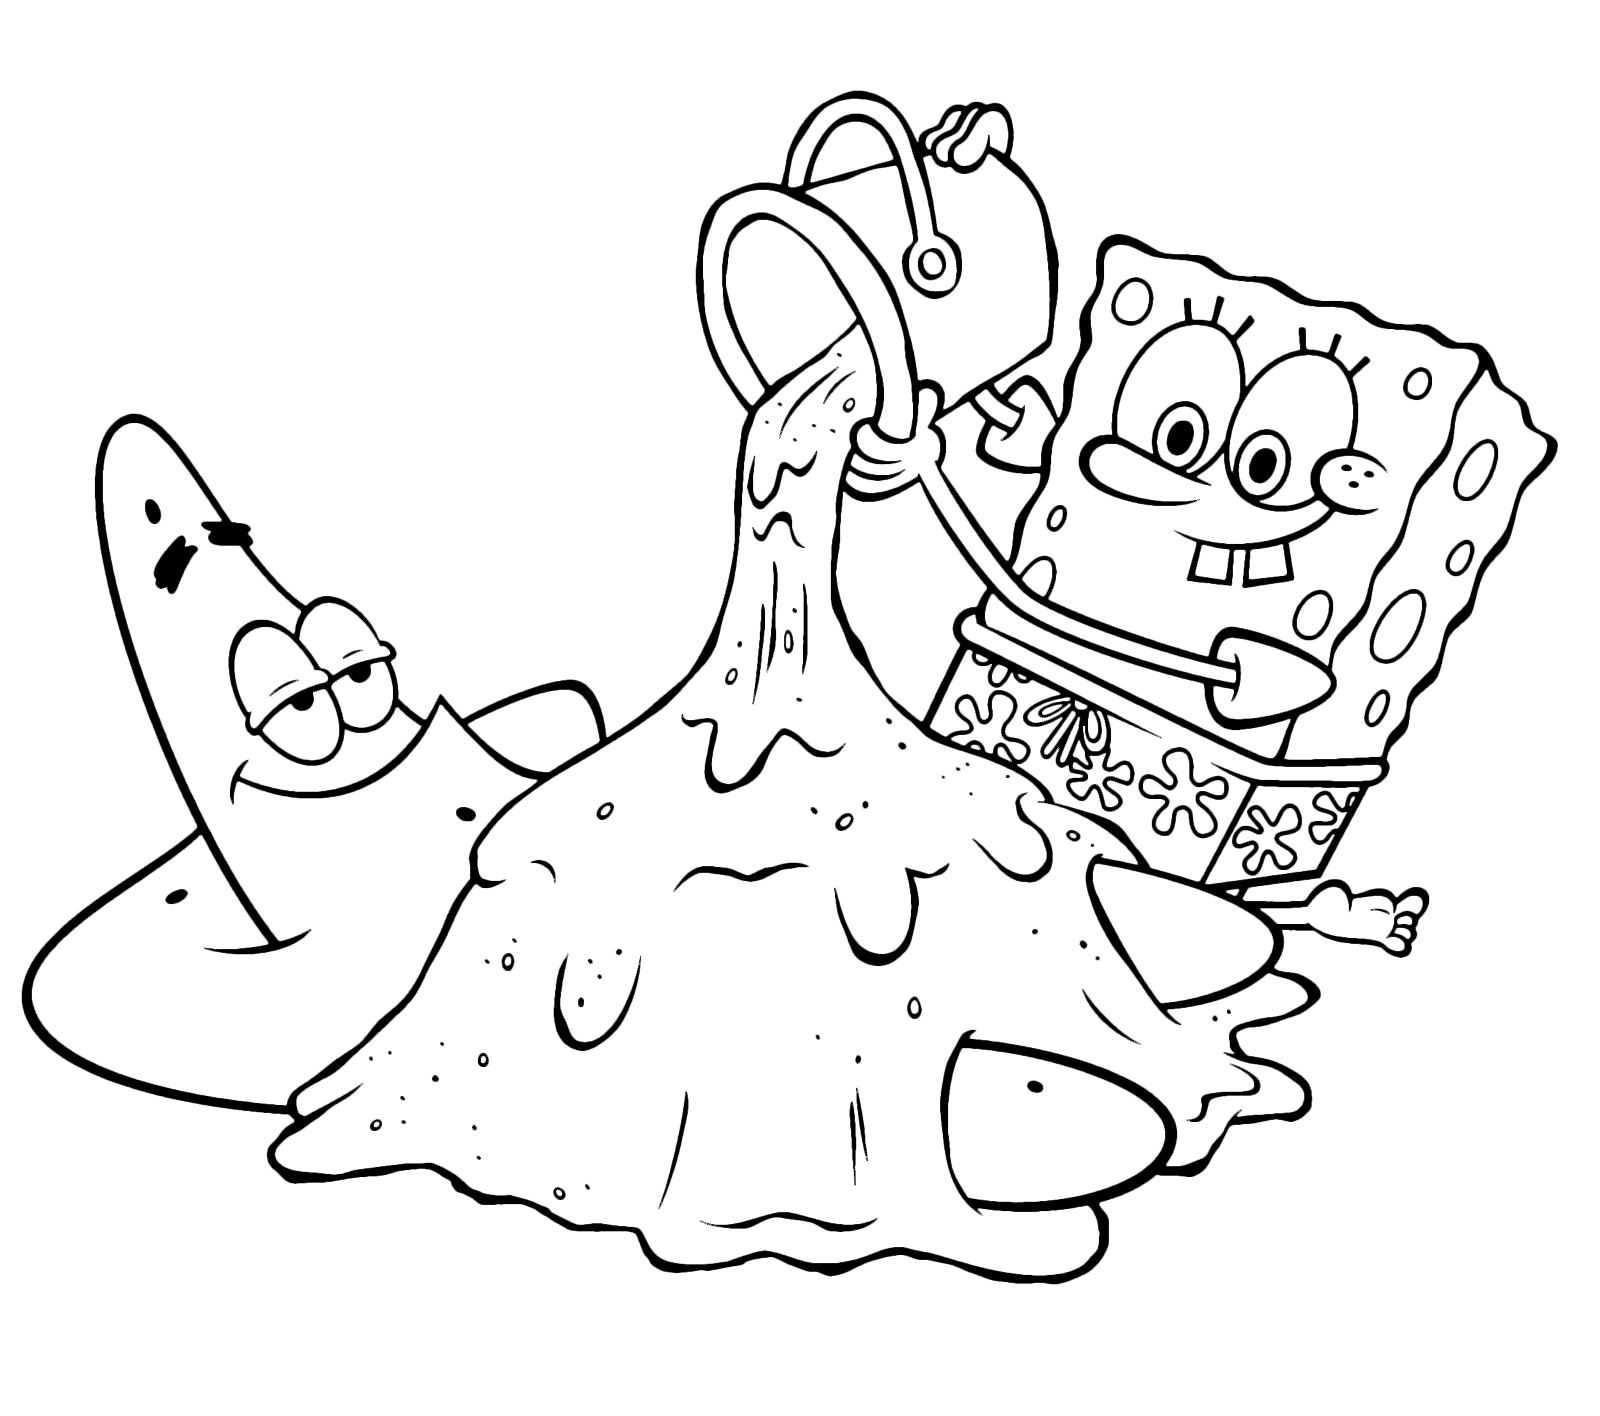 SpongeBob - SpongeBob plays with Patrick on the beach